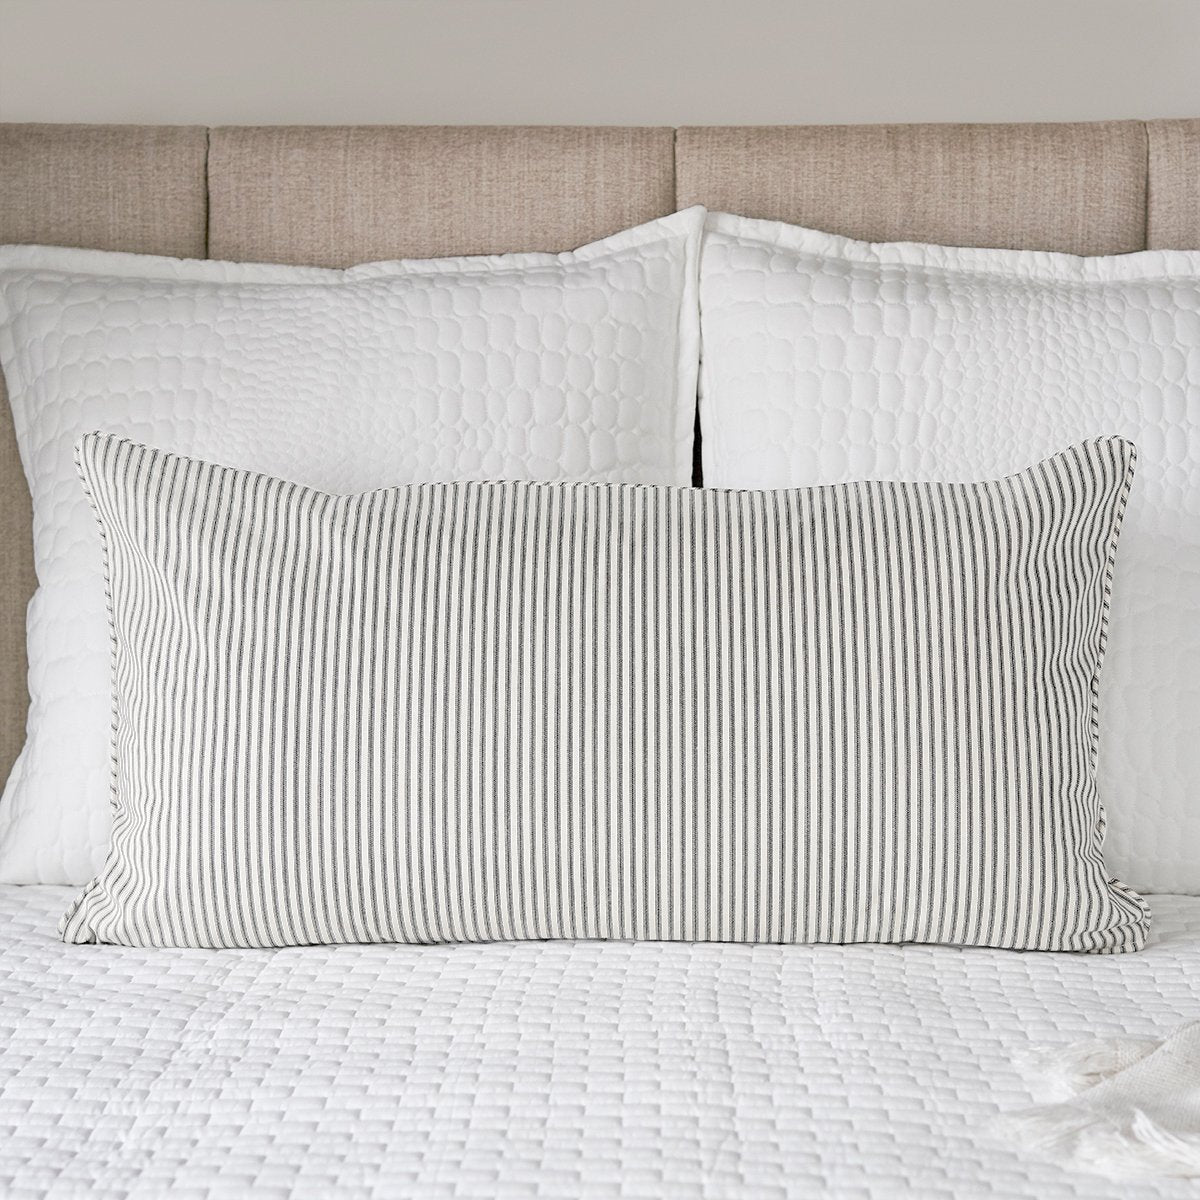 Ticking Stripe Pillow Sham |  King Size Gray